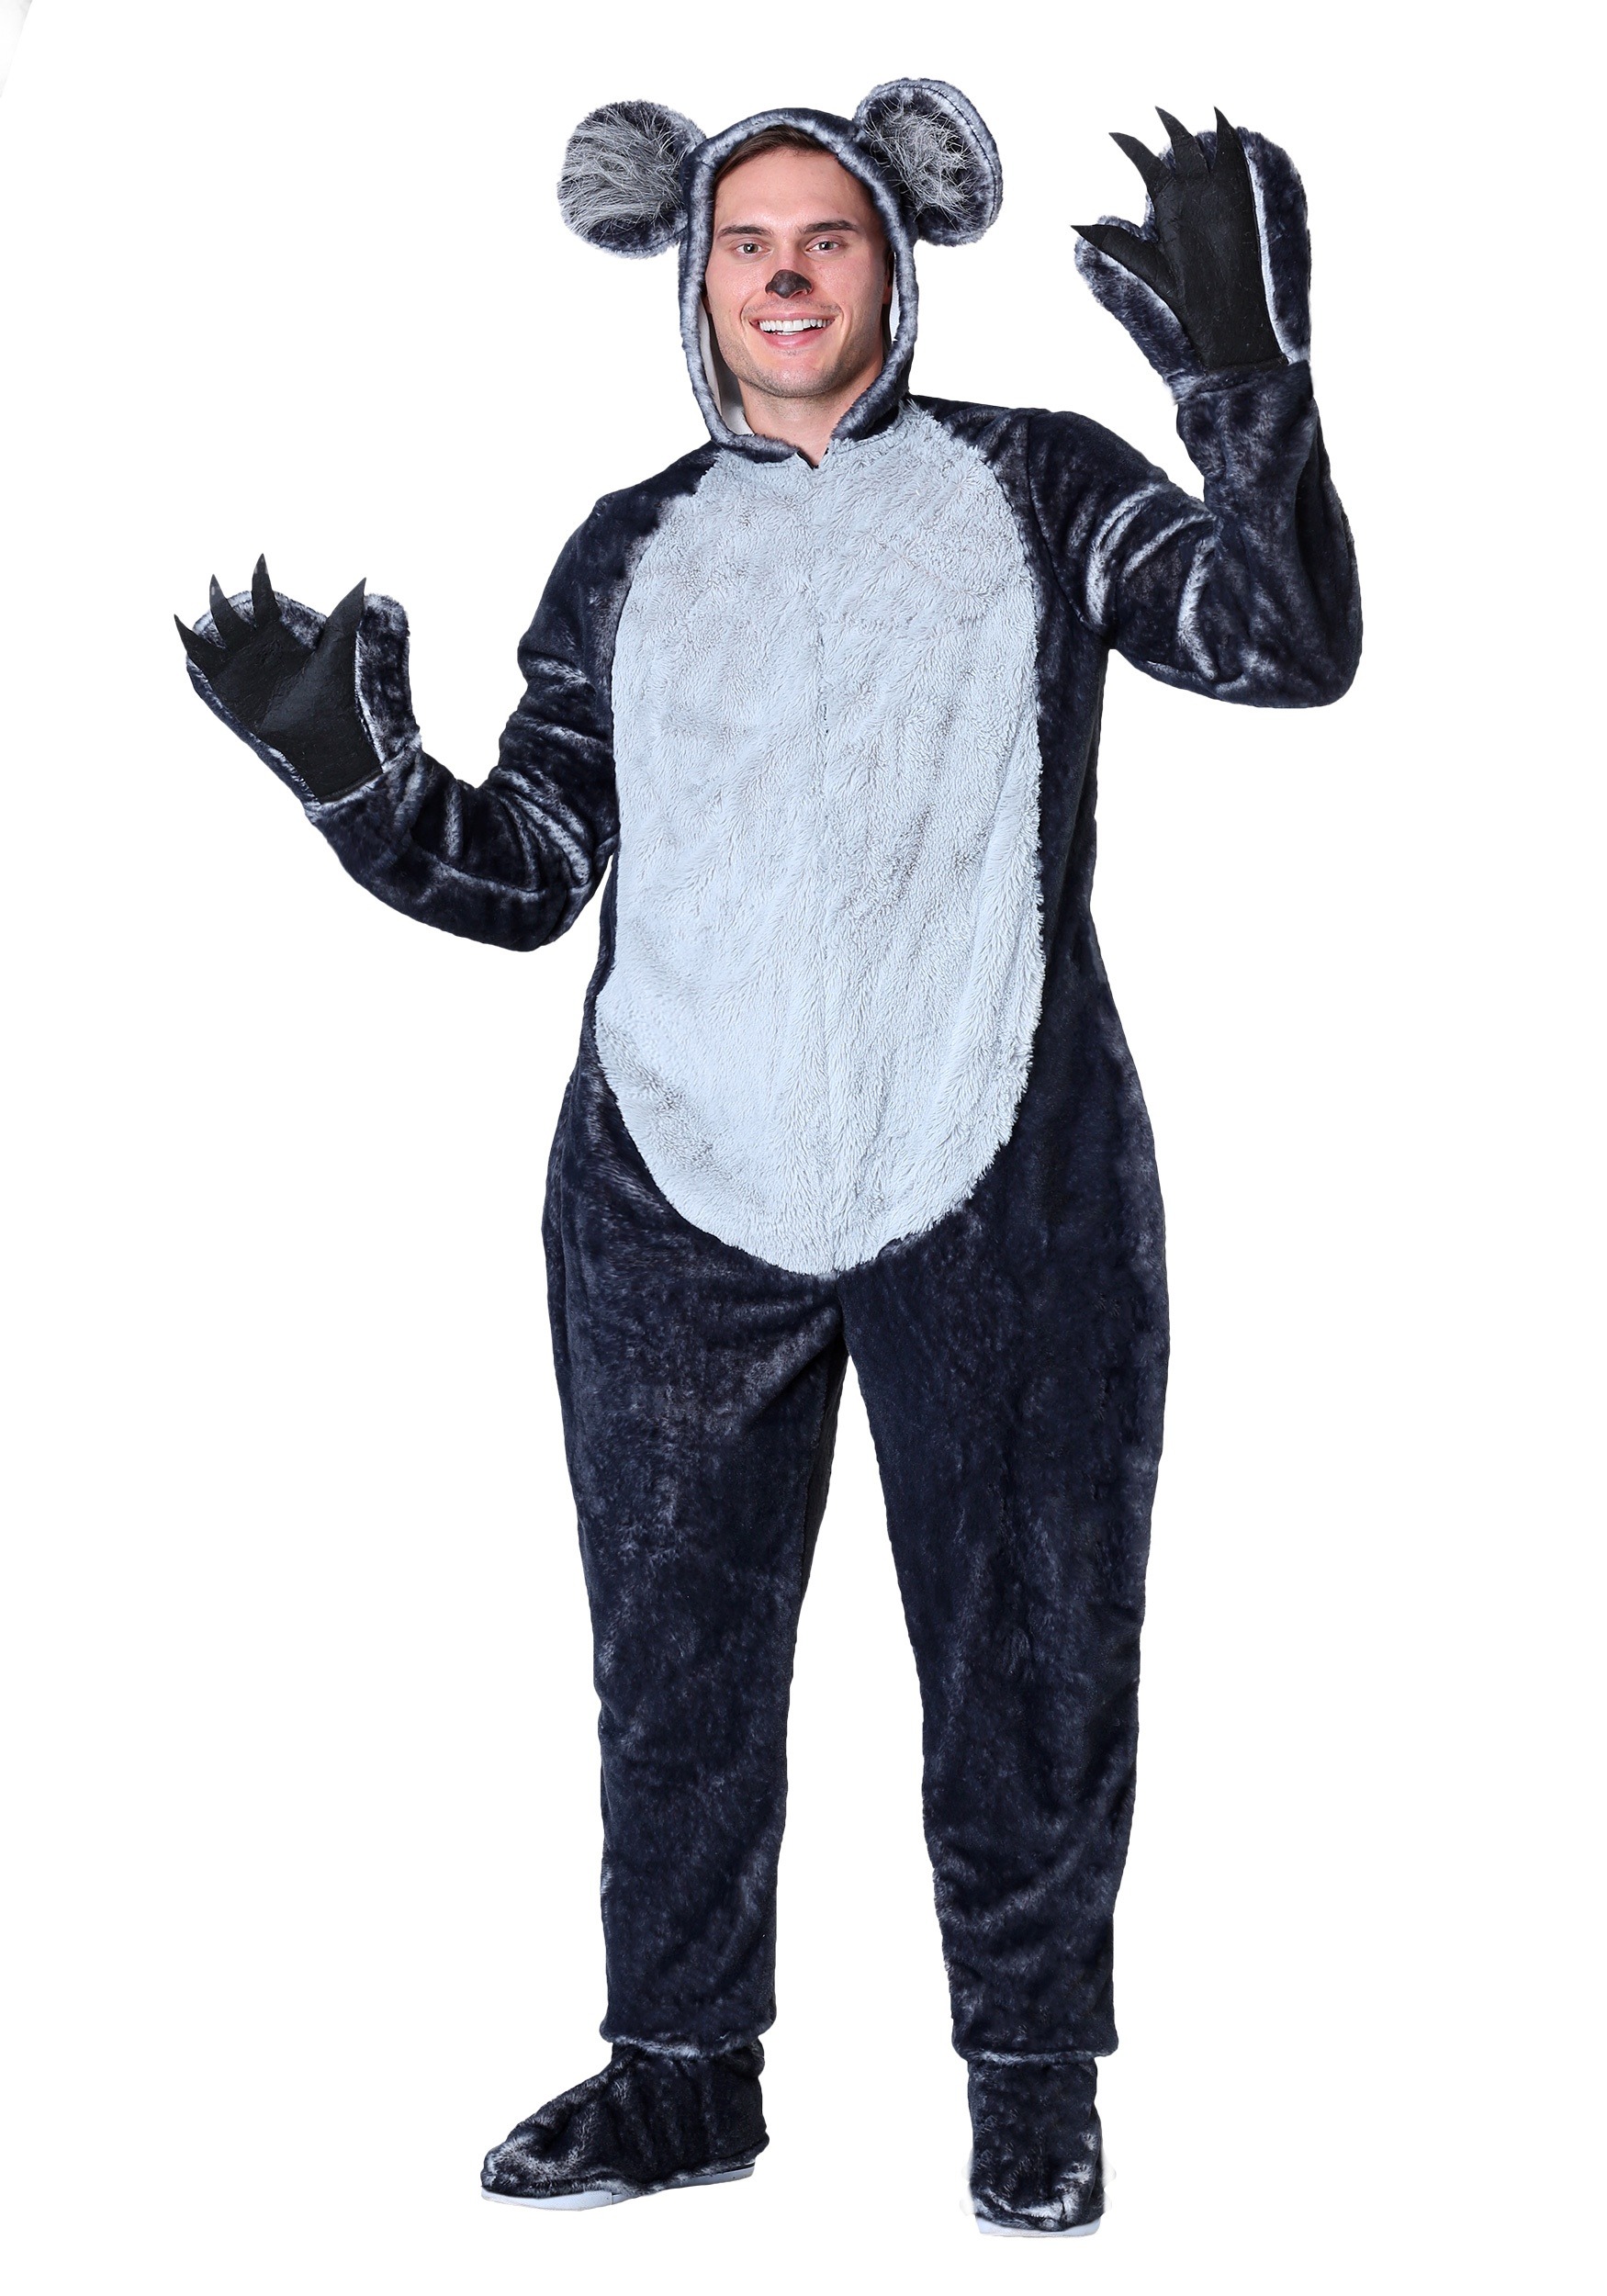 Adult Koala Costume